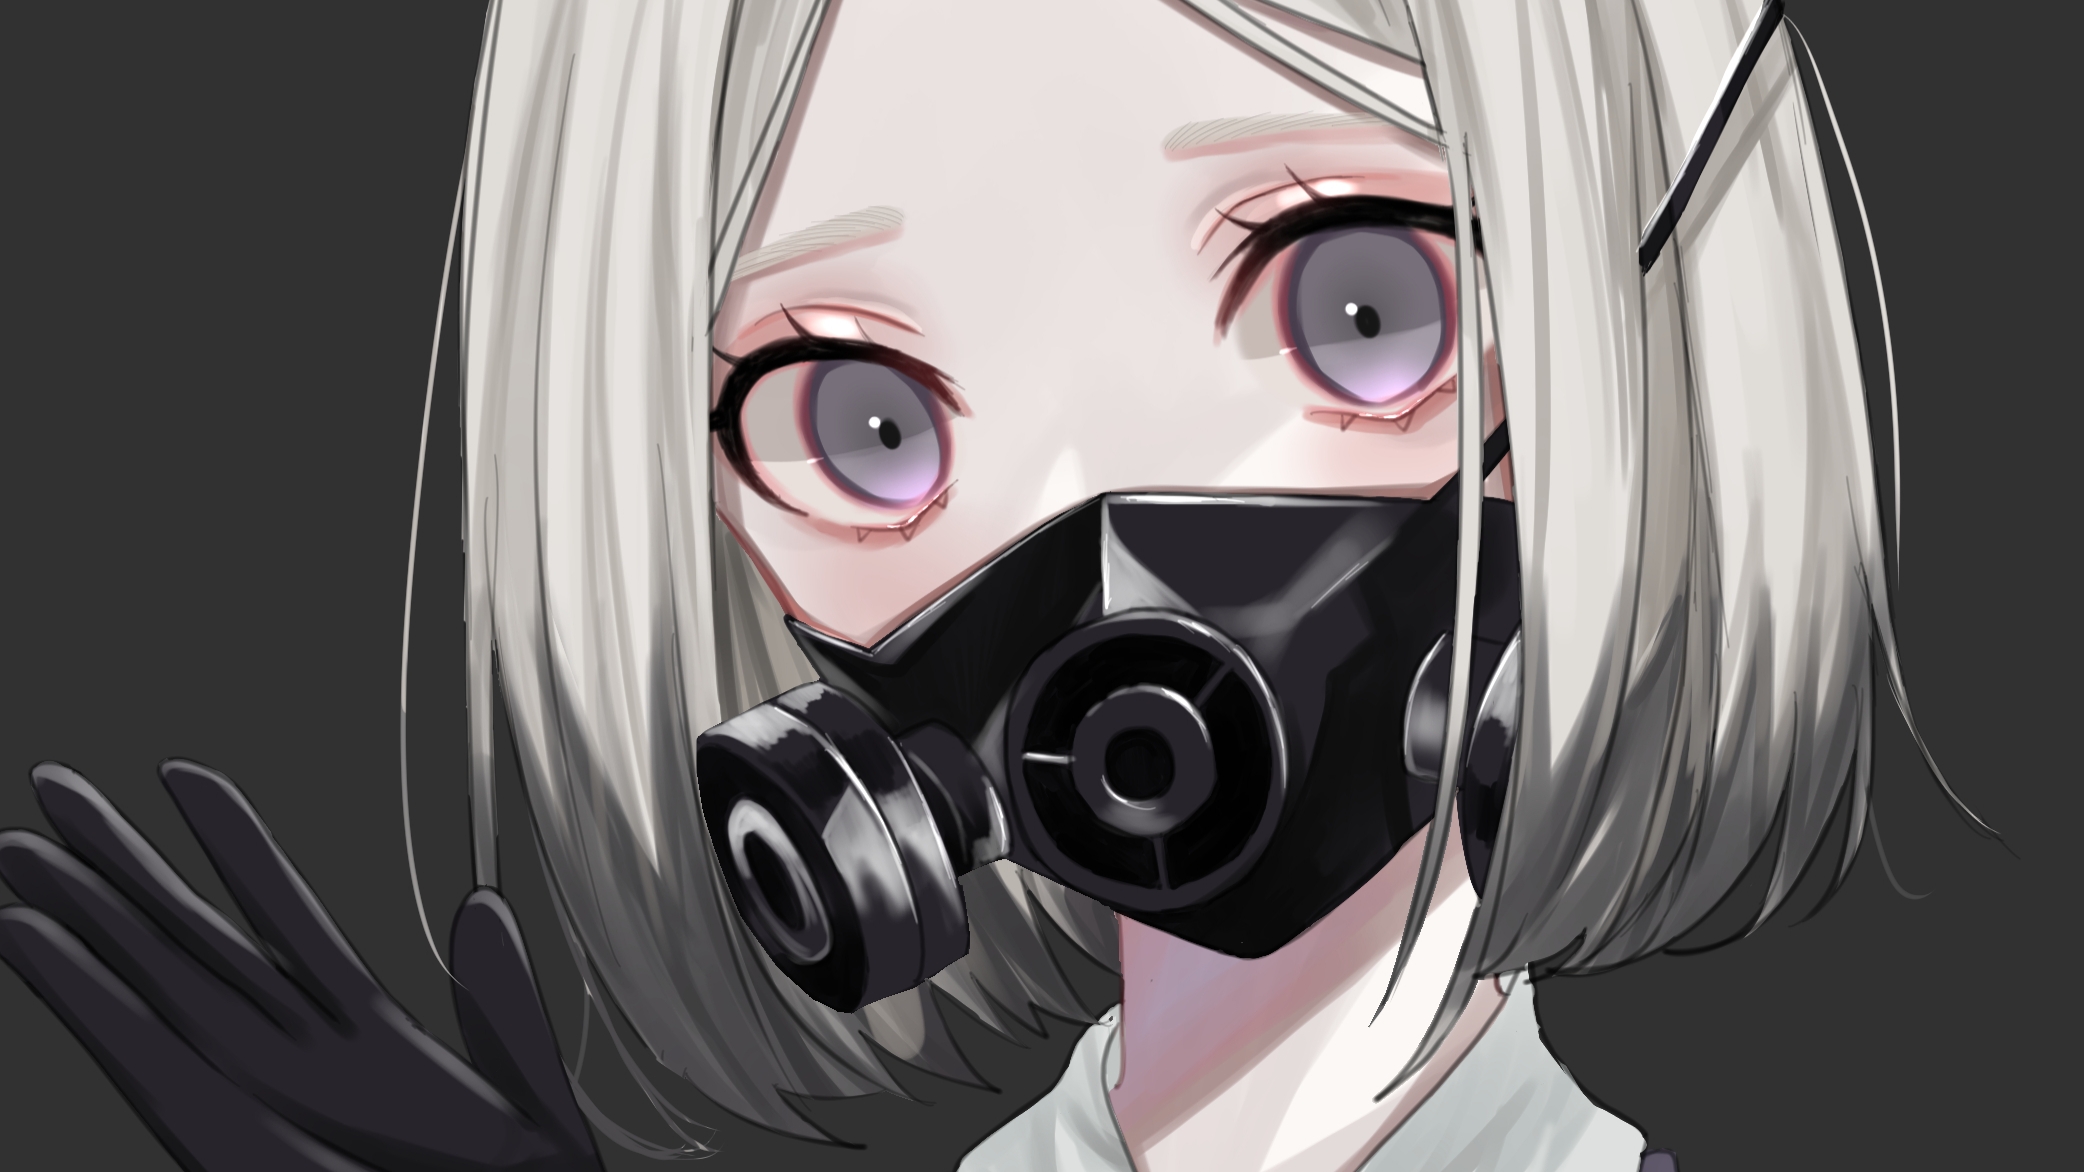 17+ Anime Girl With Gas Mask Wallpaper - Sachi Wallpaper